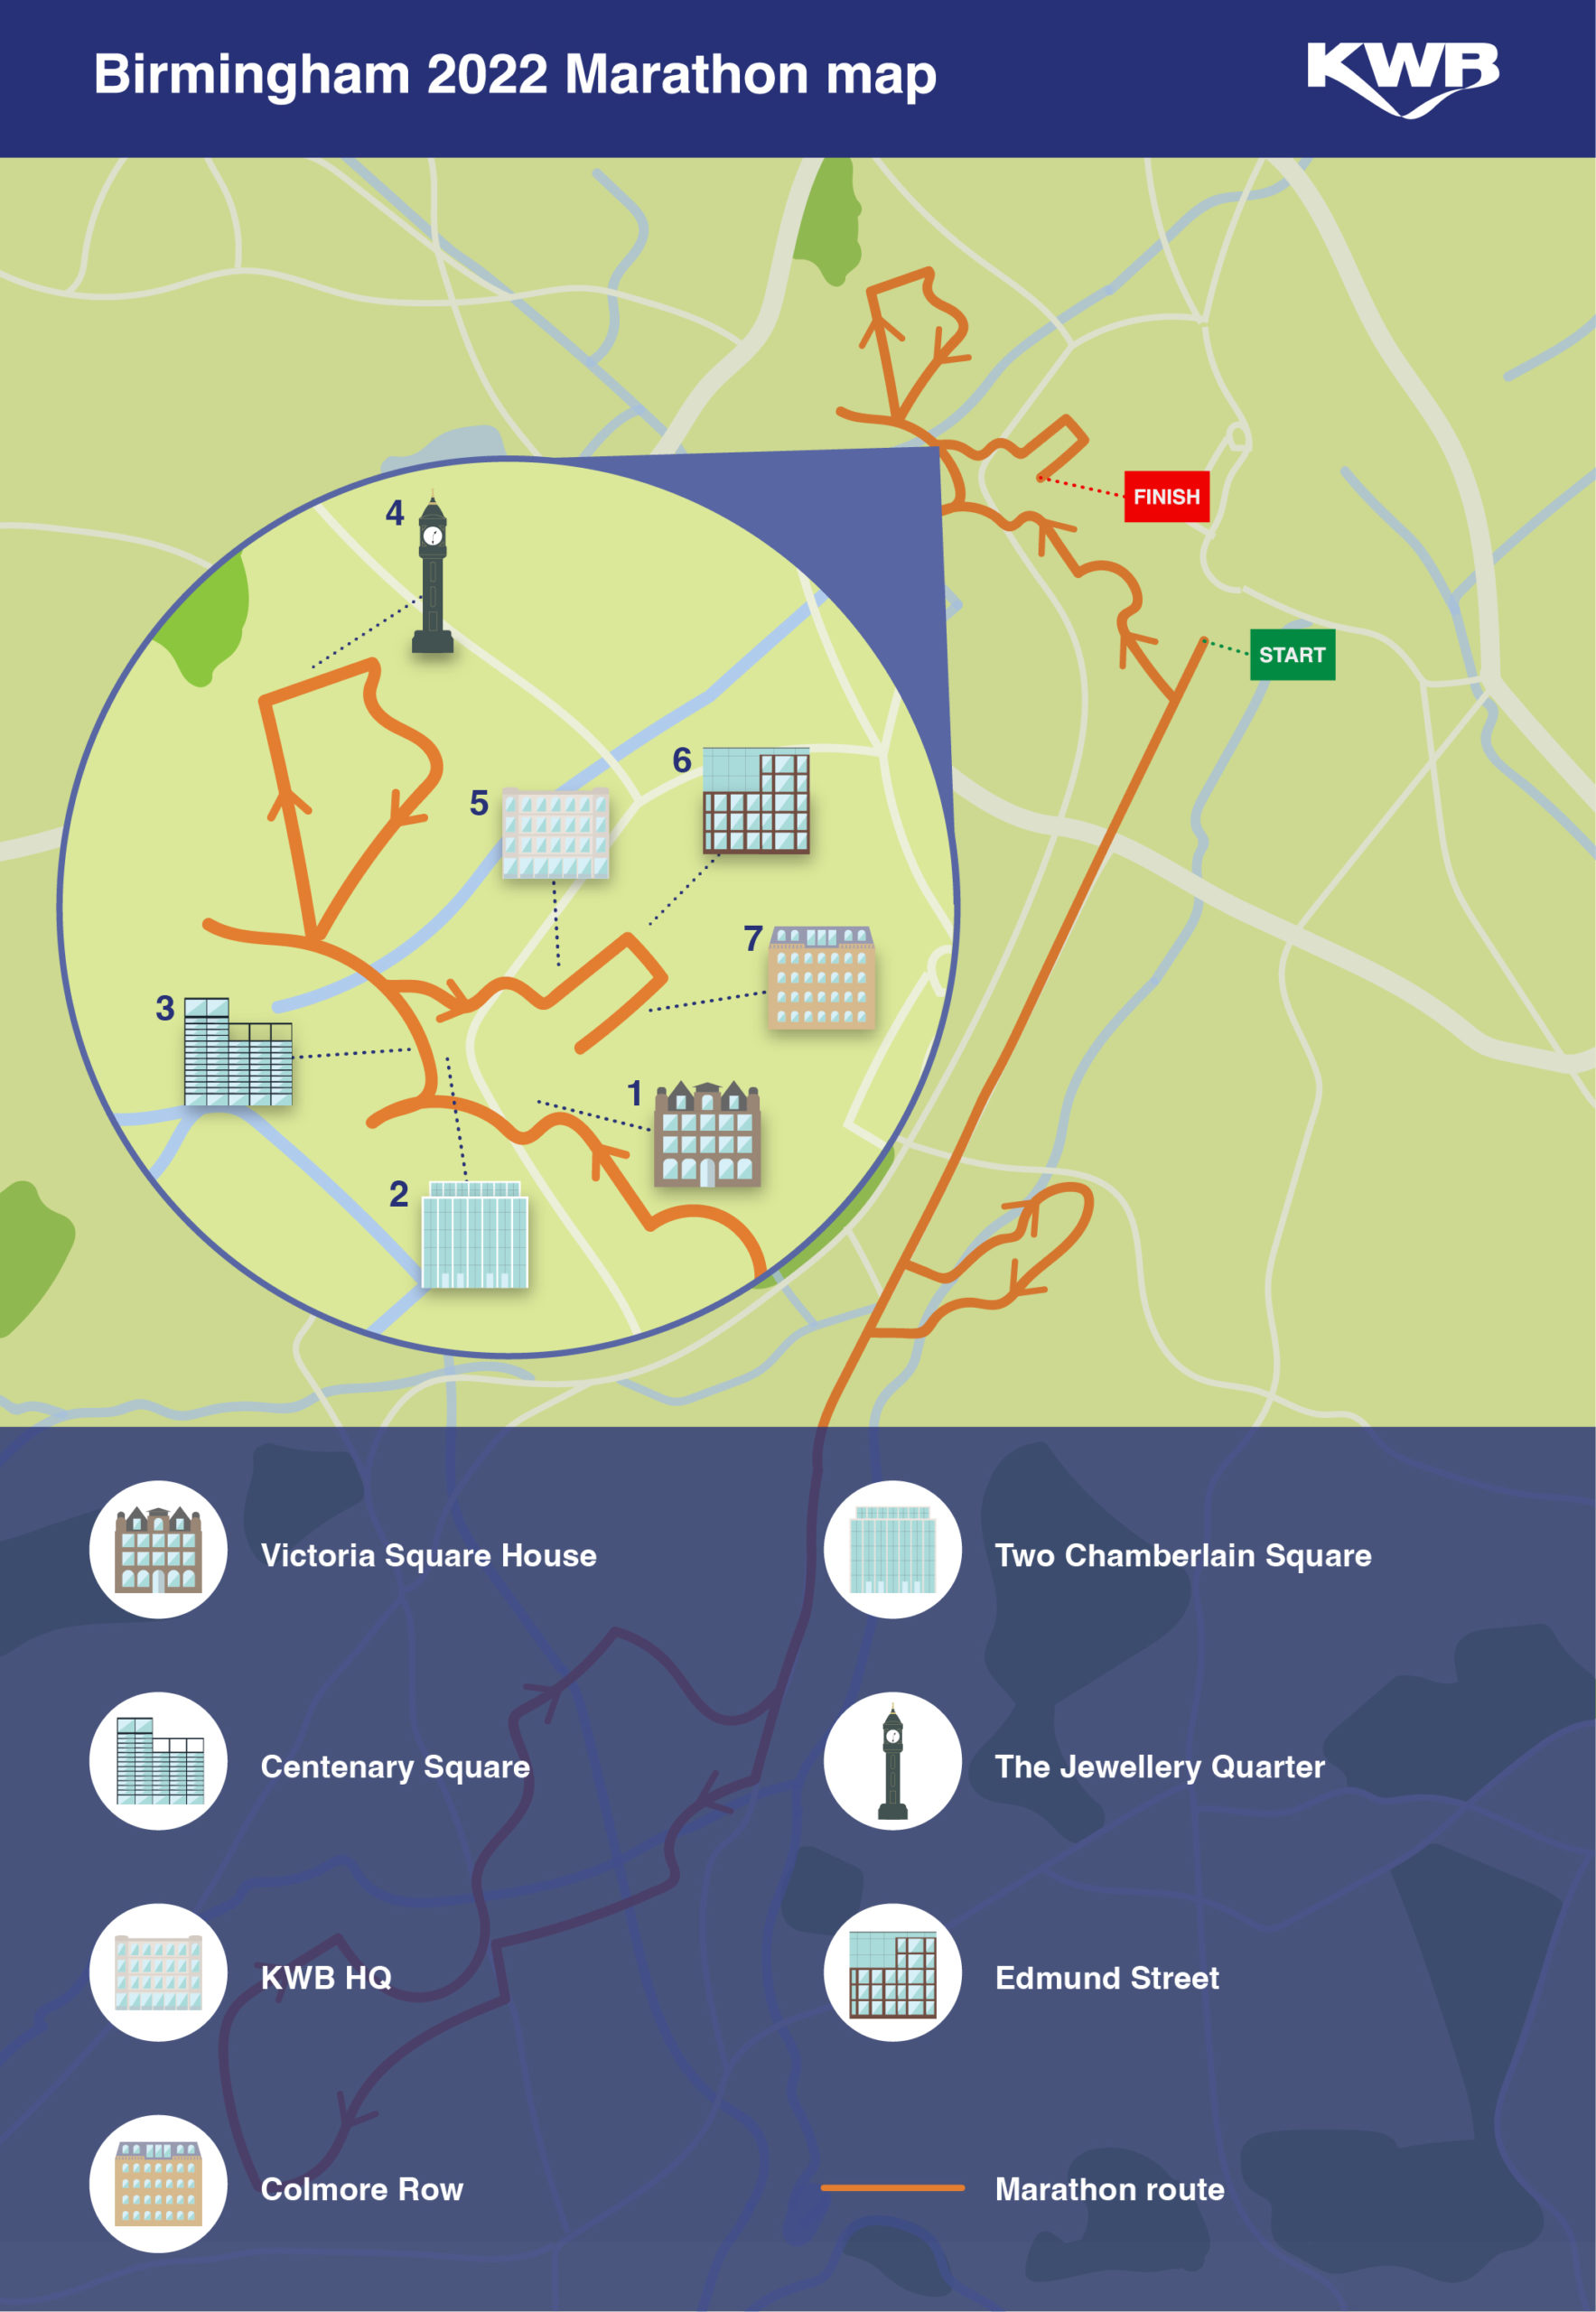 Commonwealth Games Birmingham 2022 Marathon map showing key offices in Birmingham